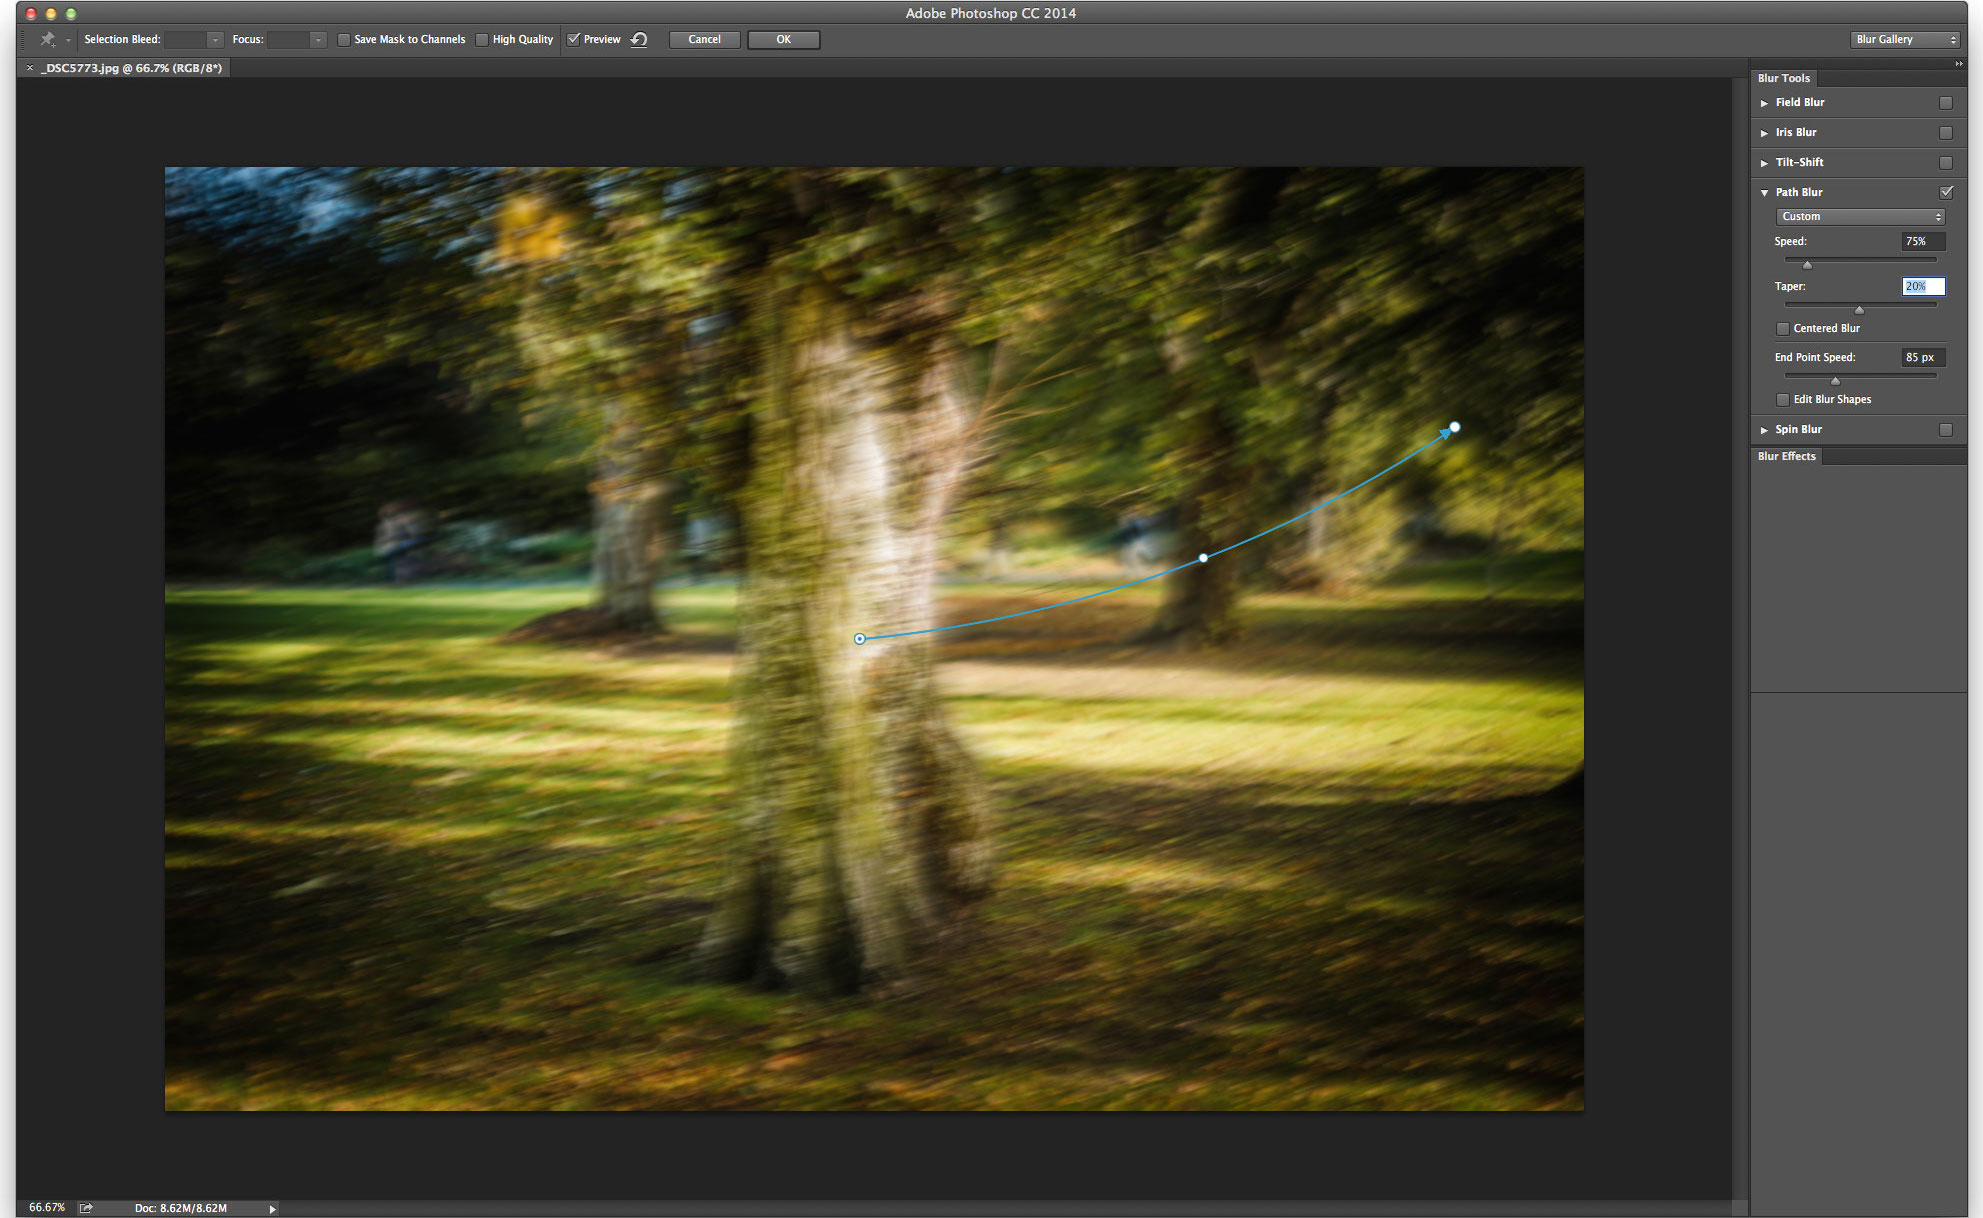 Adobe Photoshop CC 2014 for Mac Blur Dialog (2014)